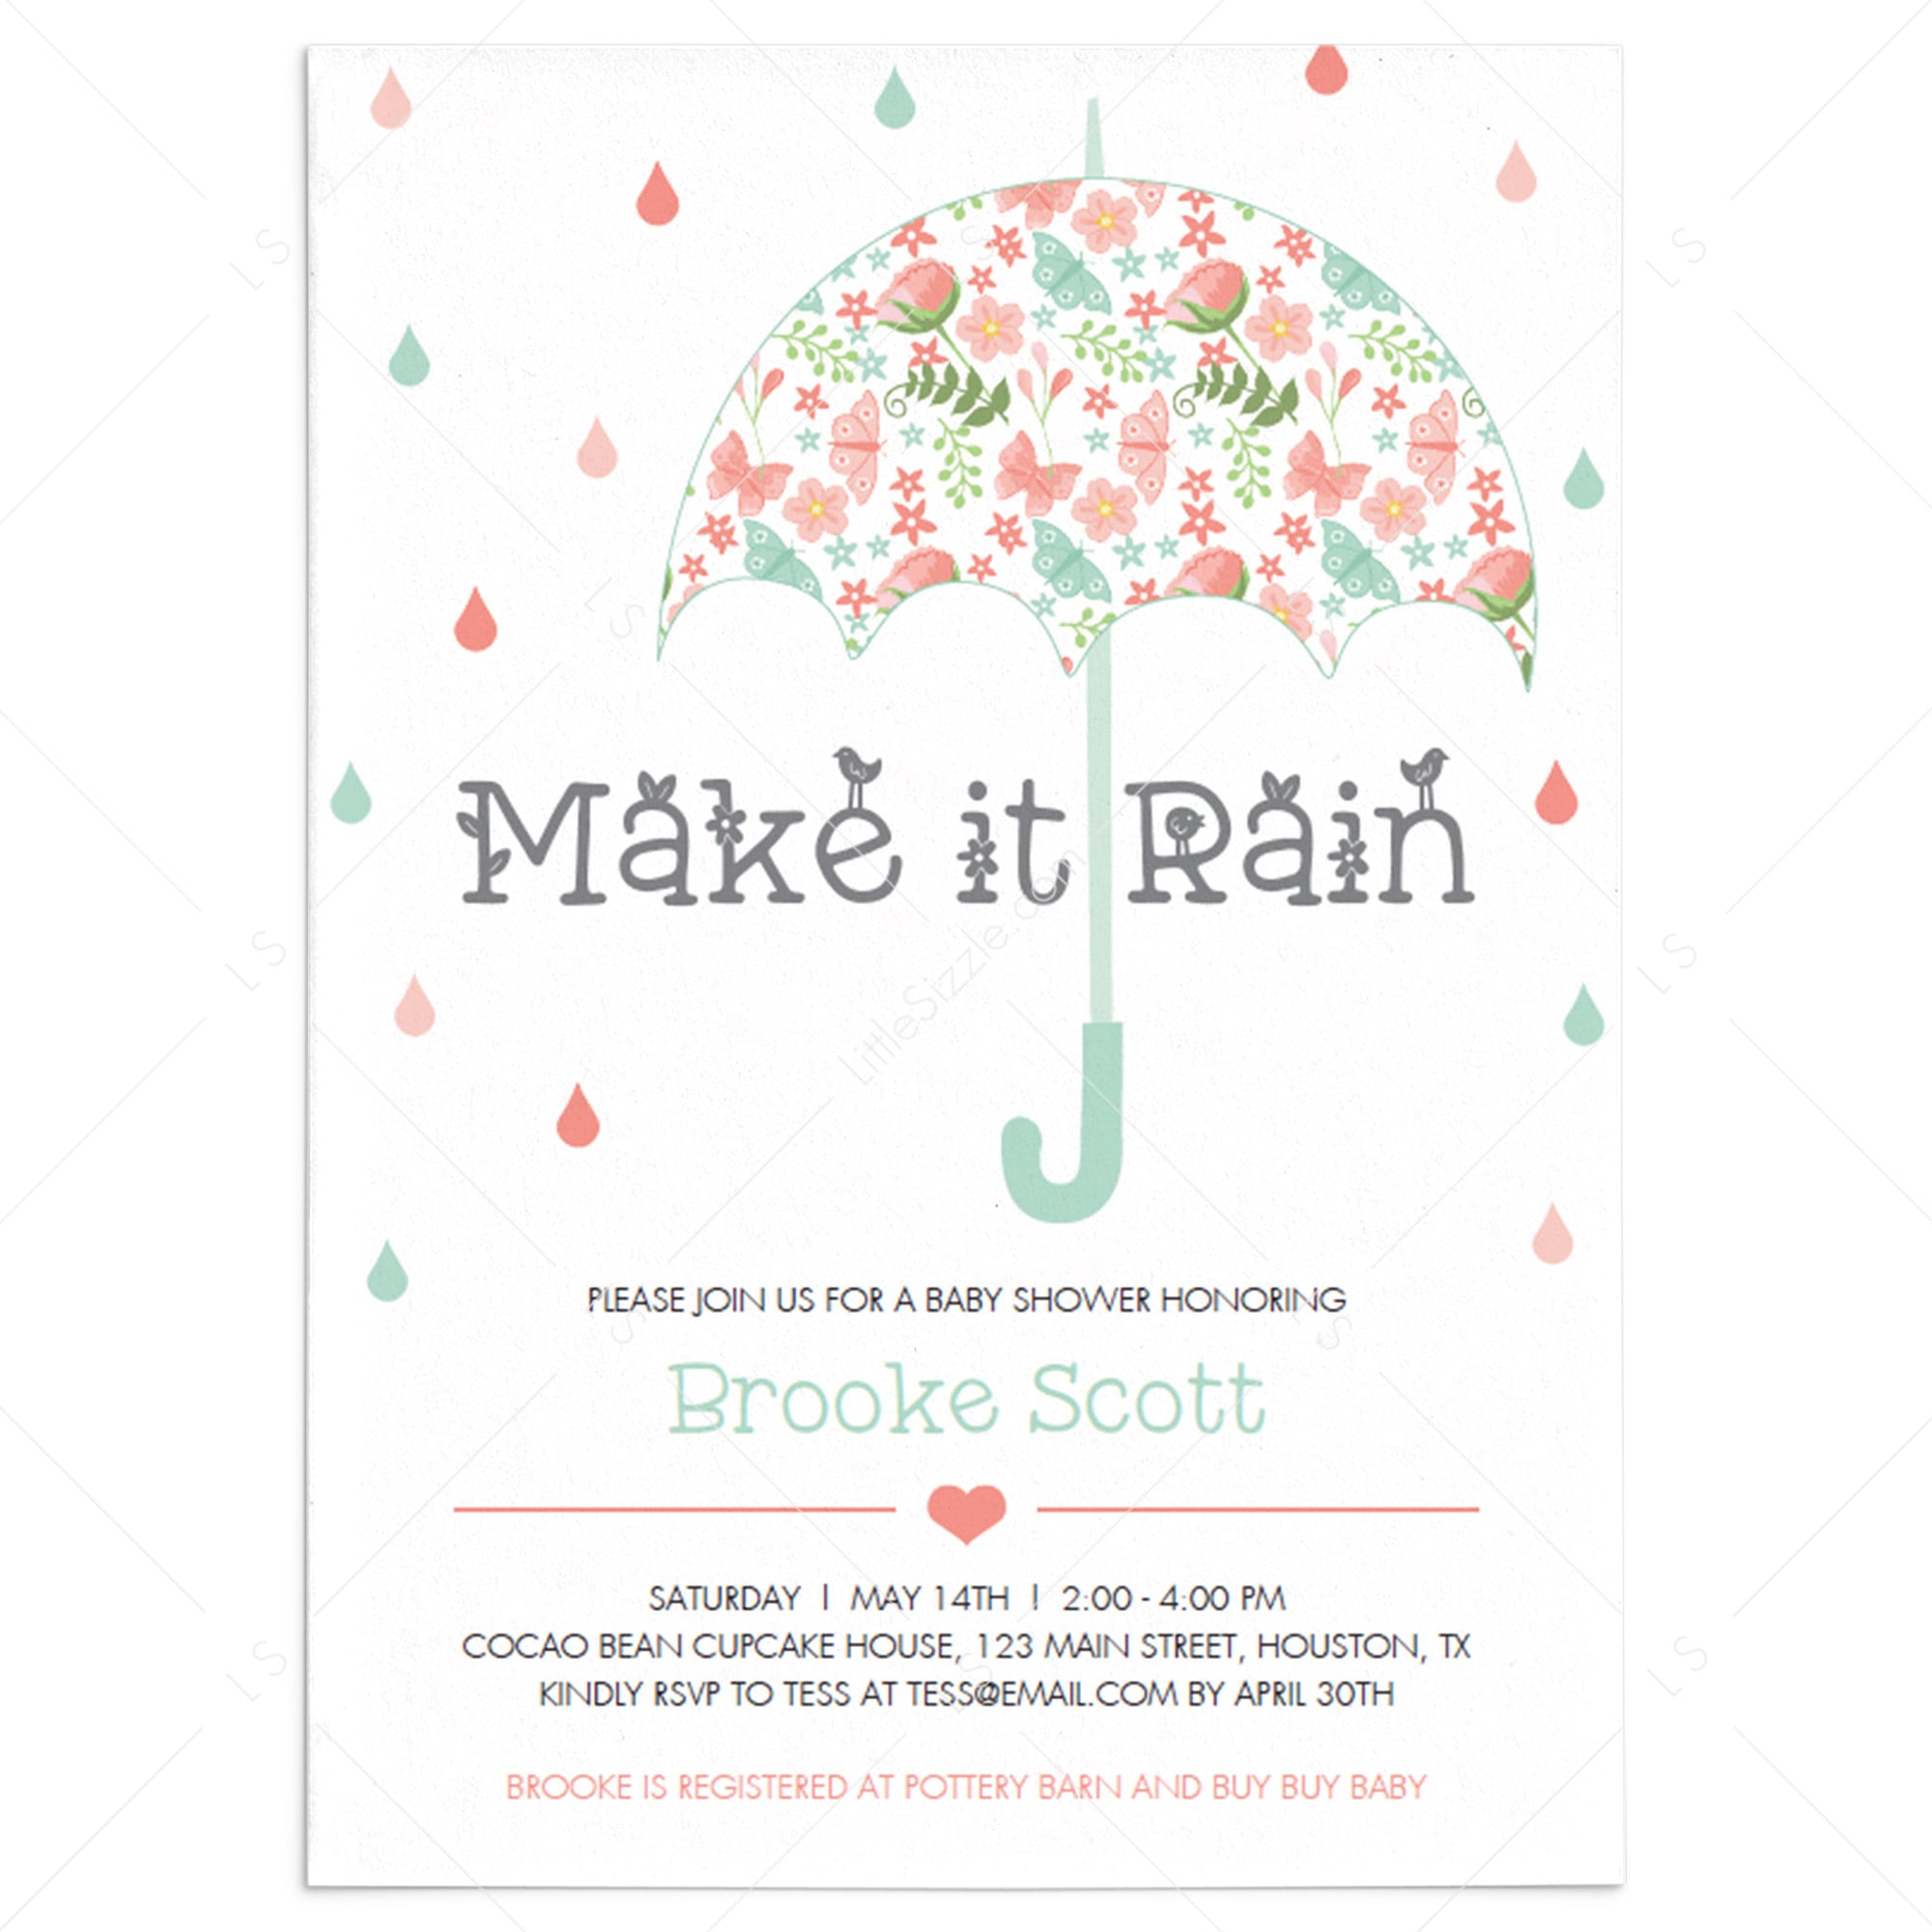 Rain baby shower invitation for girls by LittleSizzle